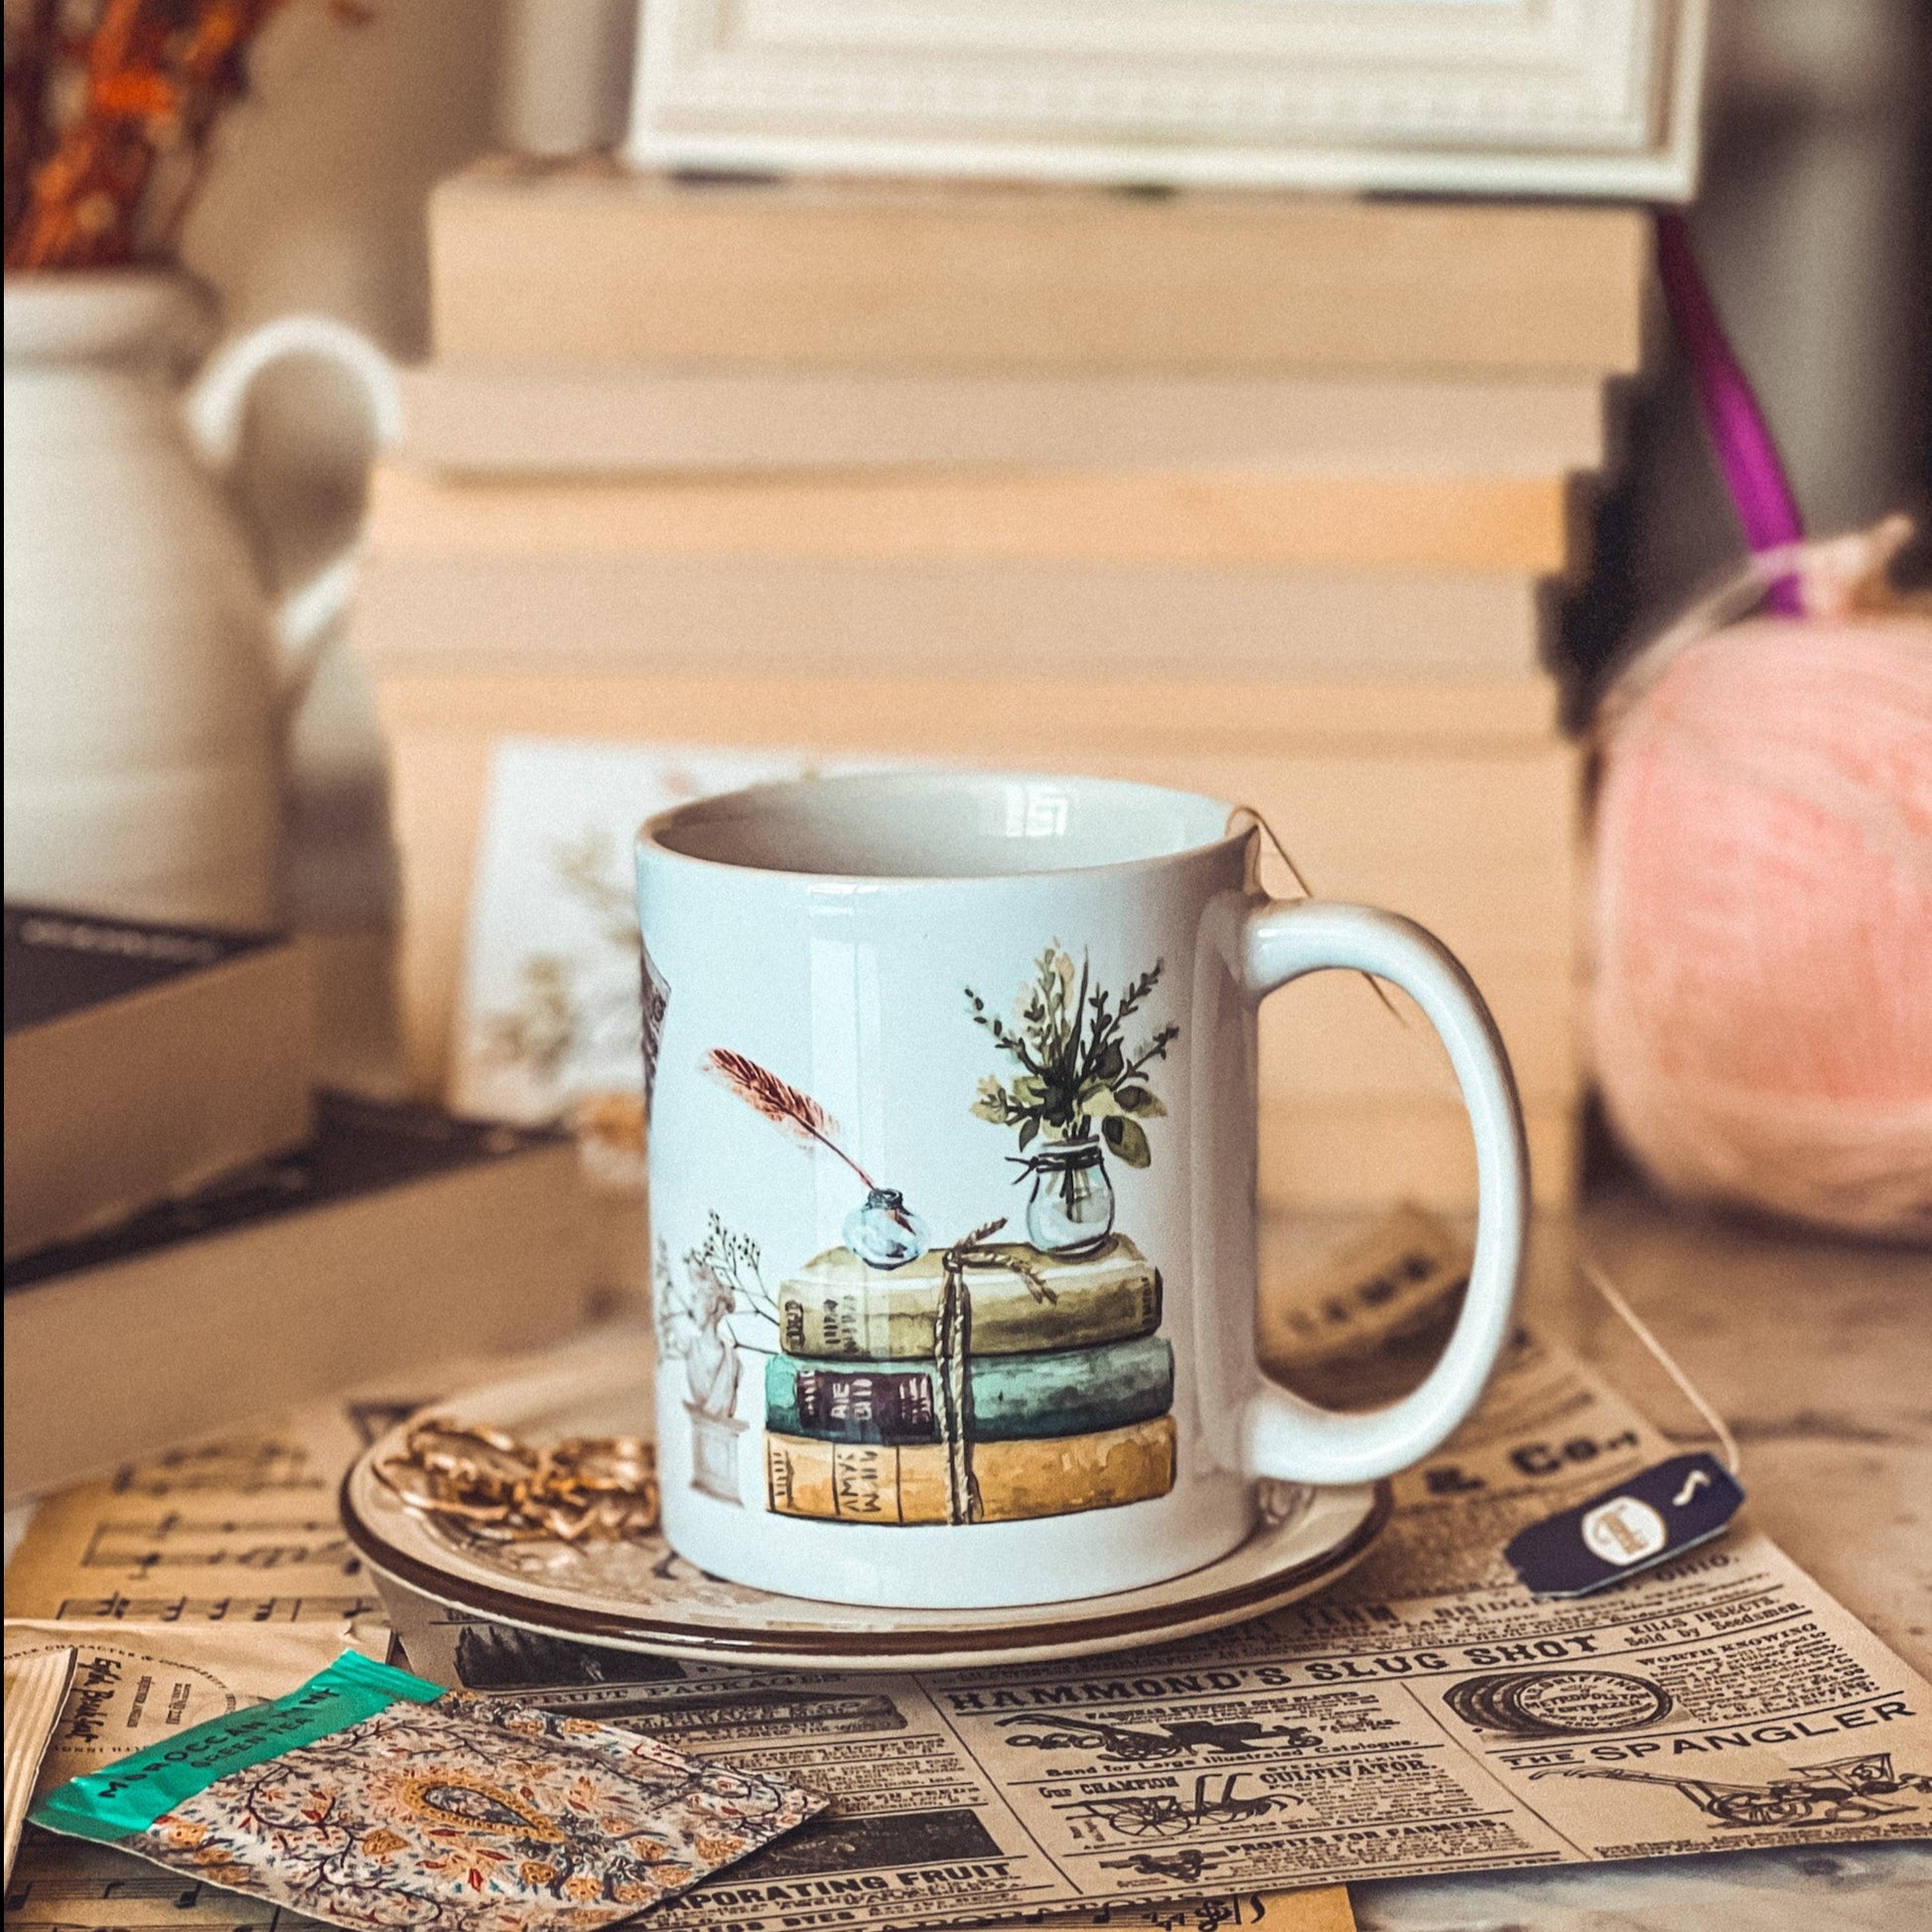 Bookish mug with books design. 